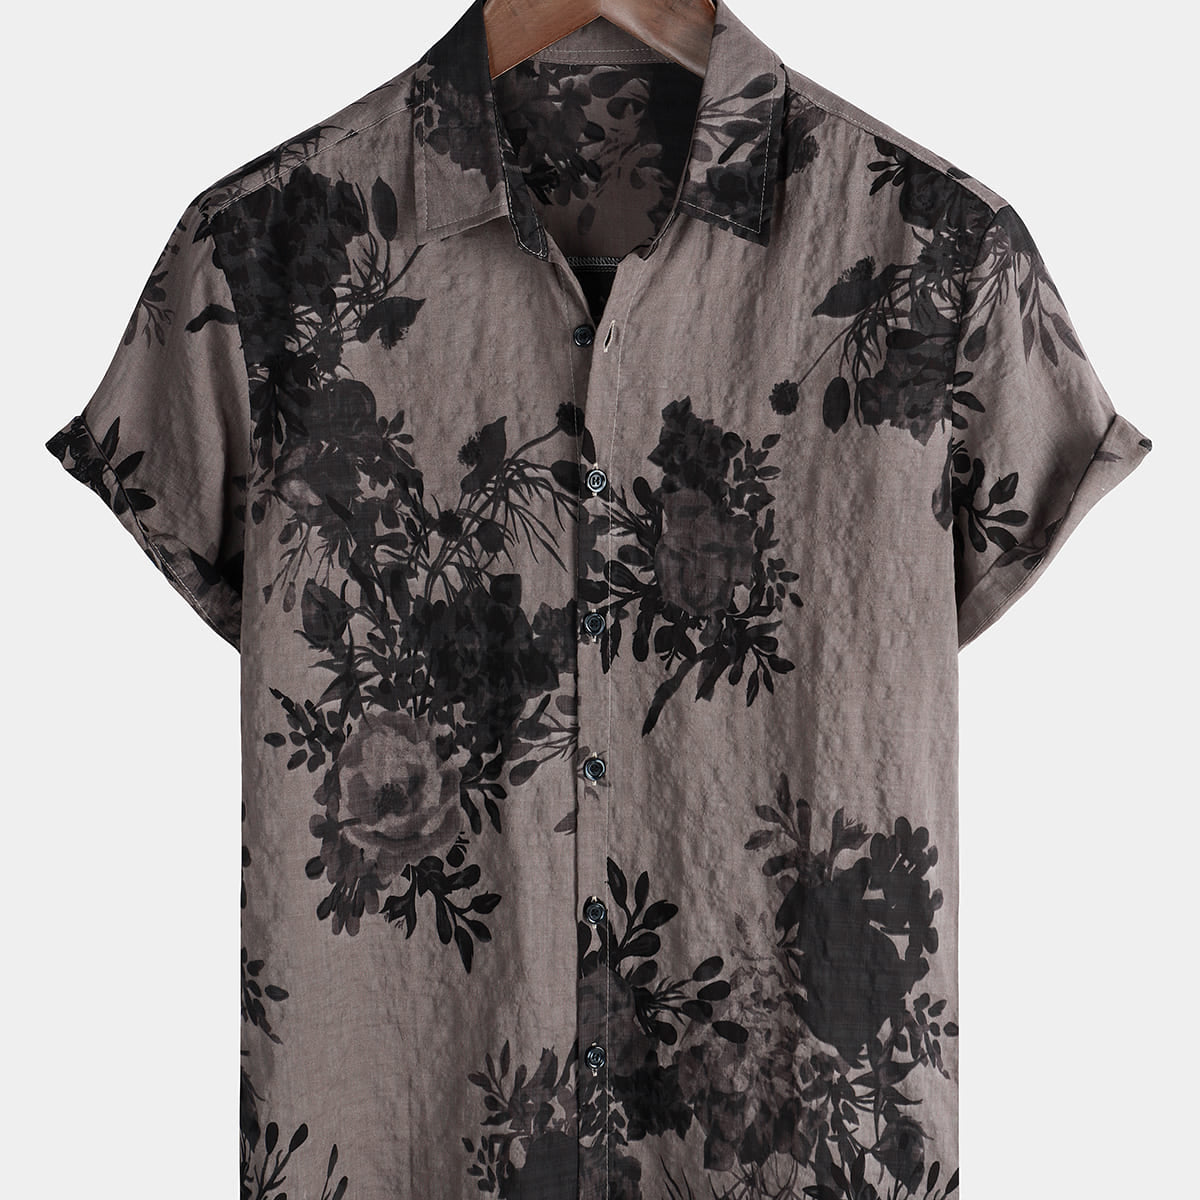 Men's Grey Summer Floral Short Sleeve Cotton Vintage Button Up Shirt